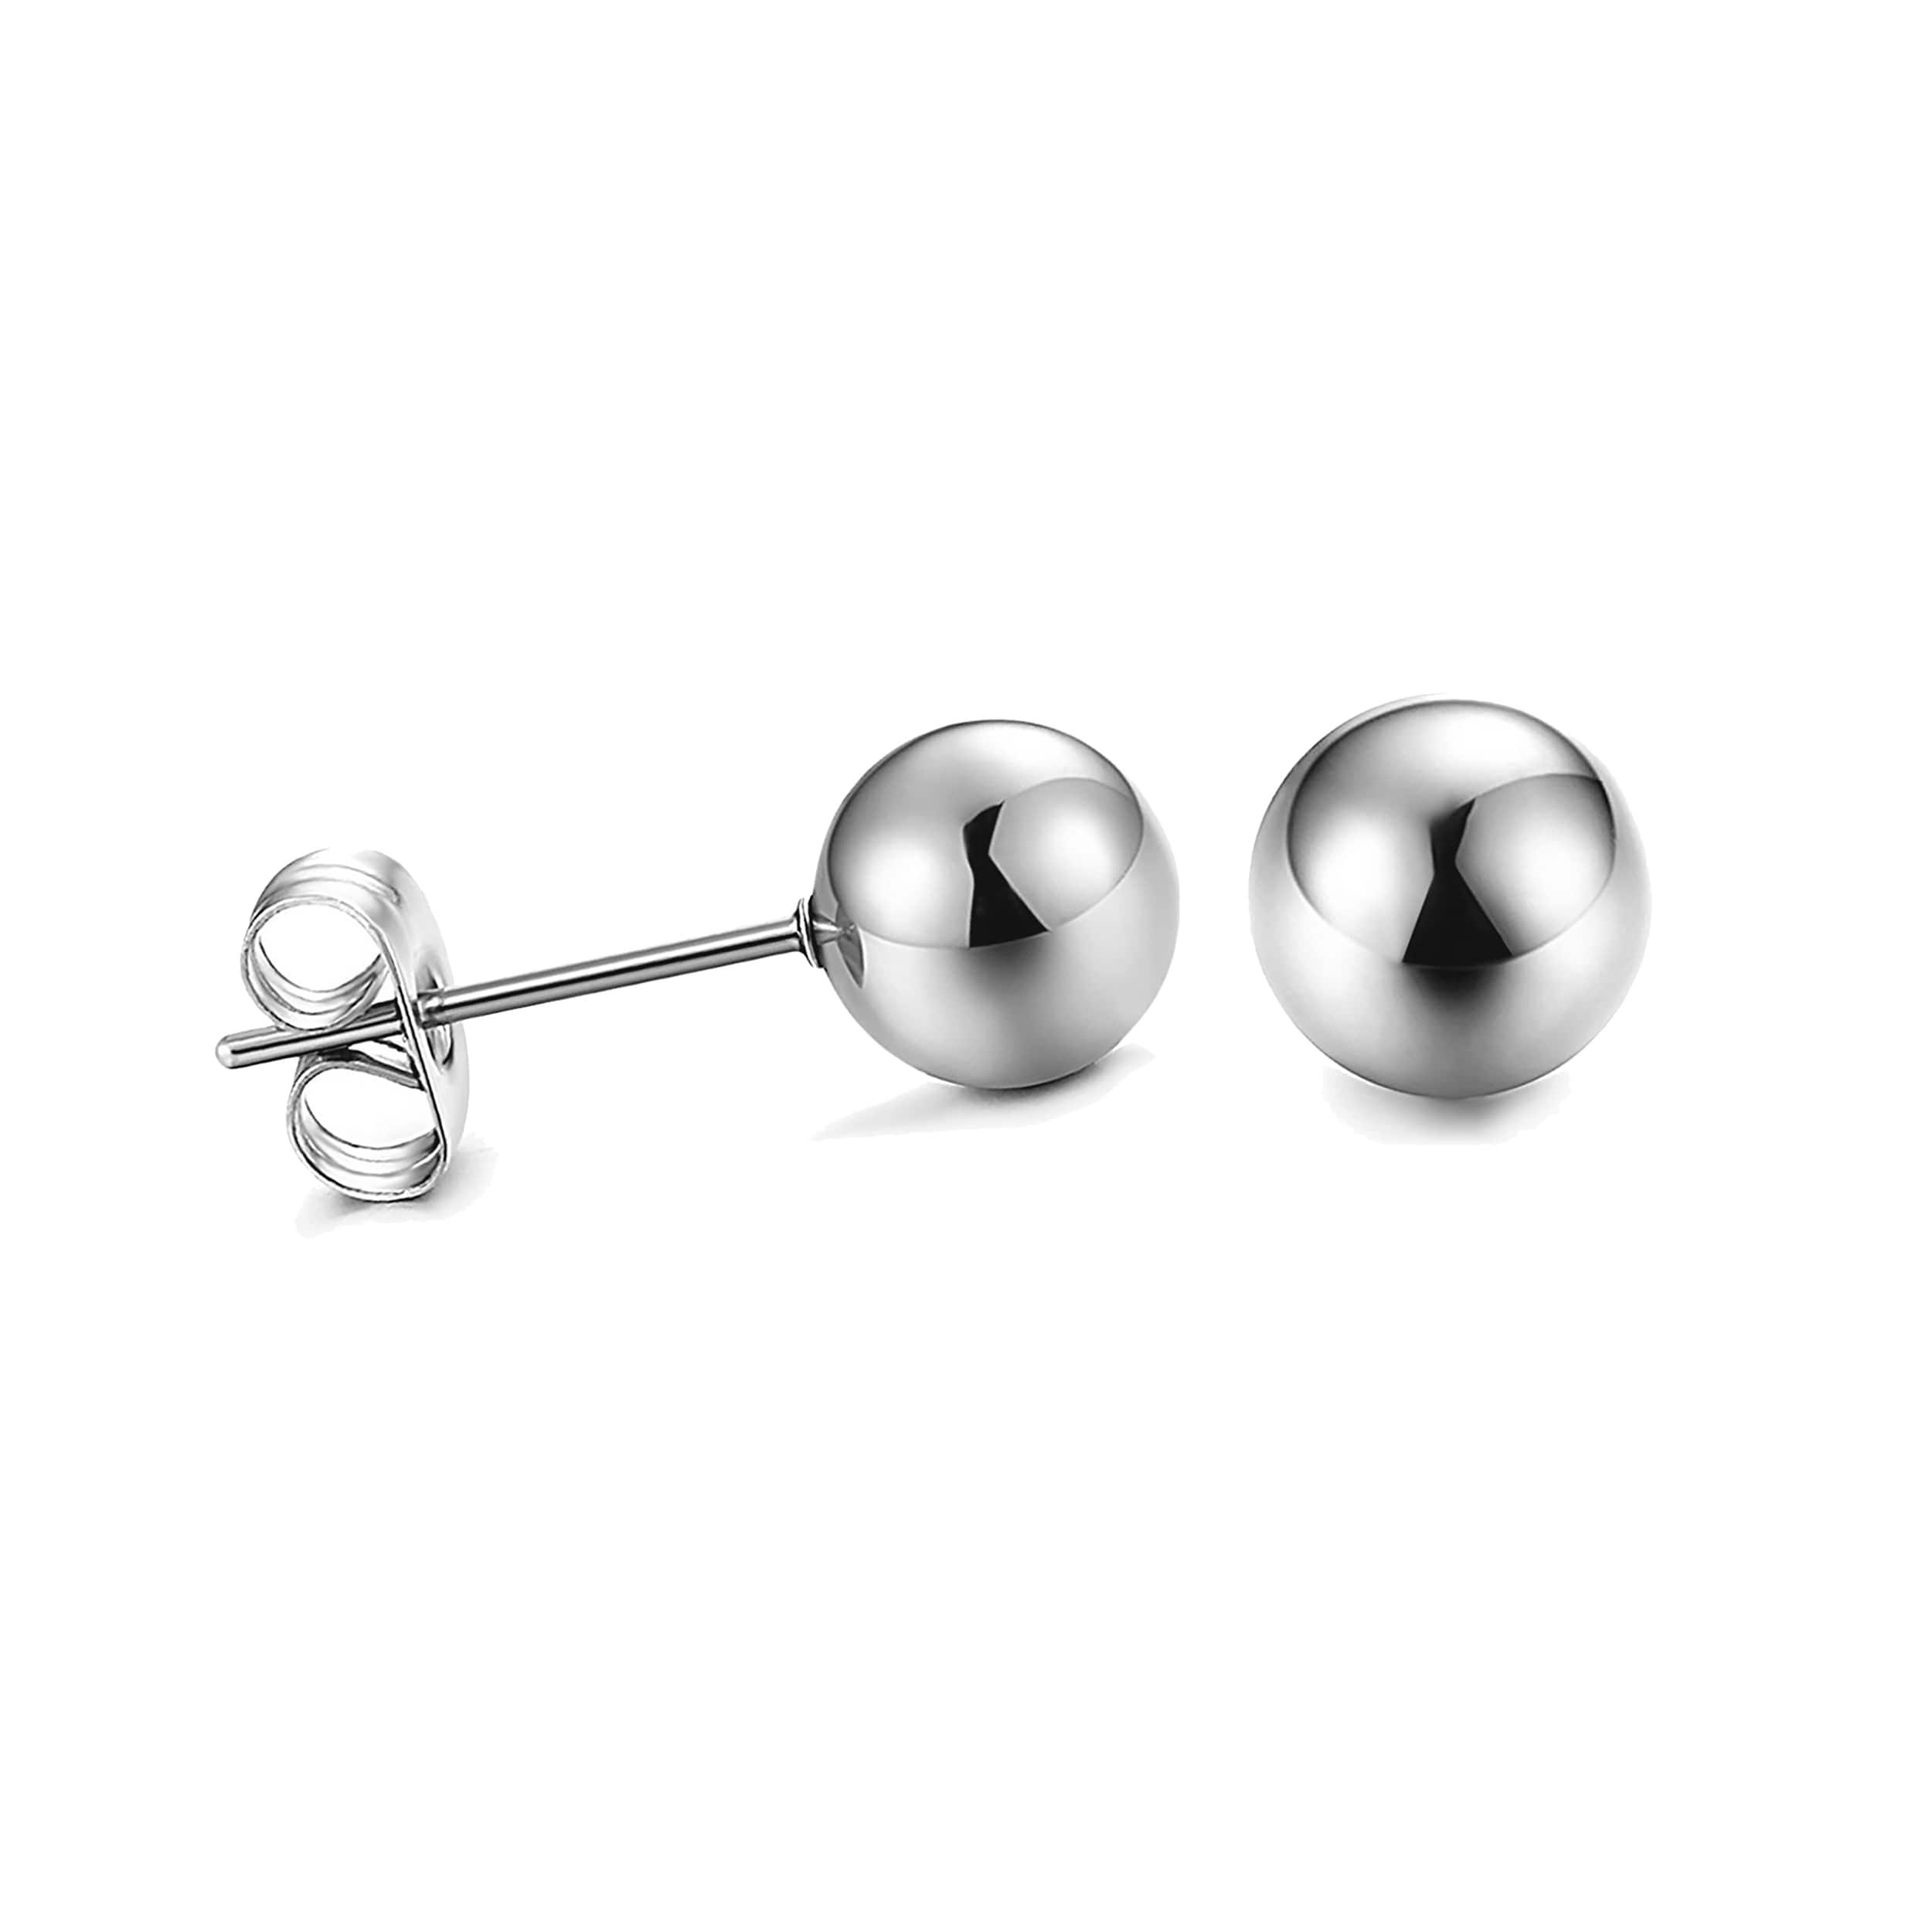 Buy Encircled Beauty Sterling Silver Stud Earrings by Mannash Jewellery